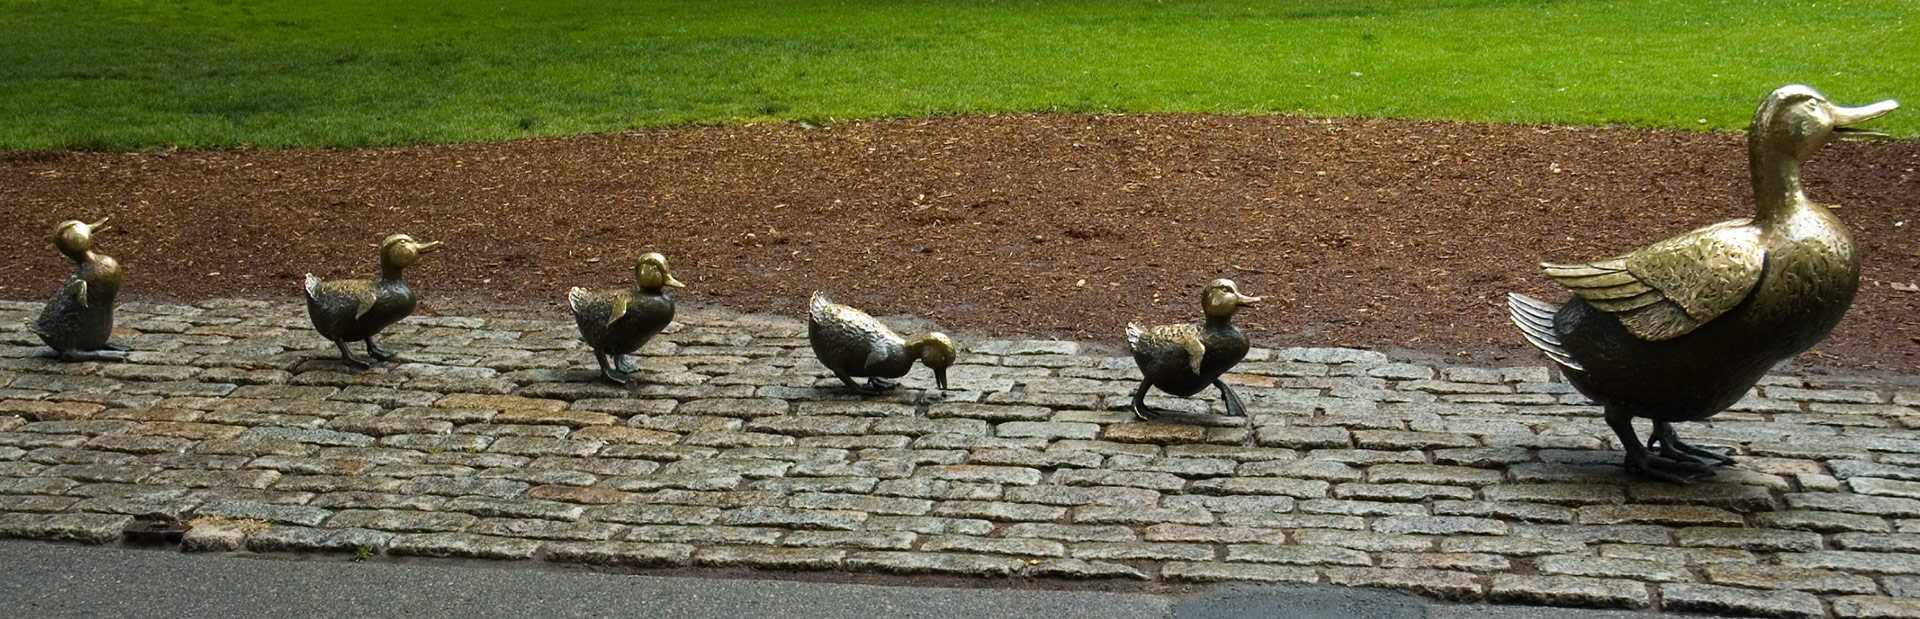 Make Way for Ducklings Sculpture